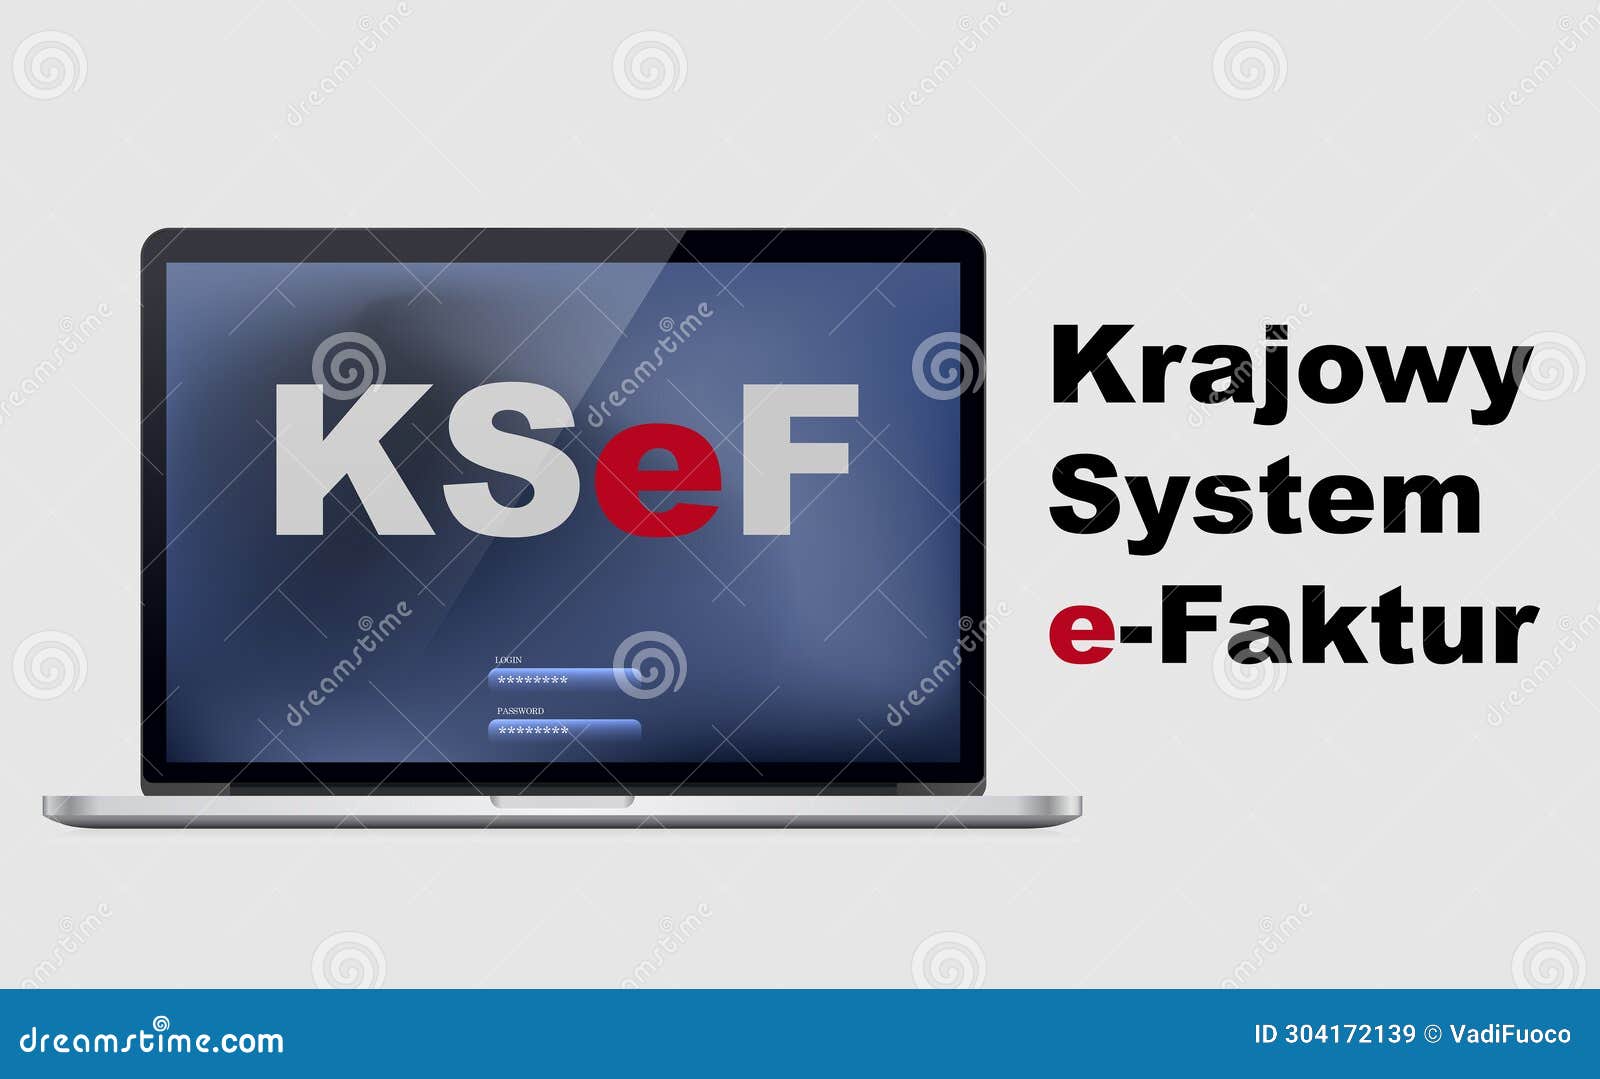 ksef, krajowy system e faktur, text written on laptop screen